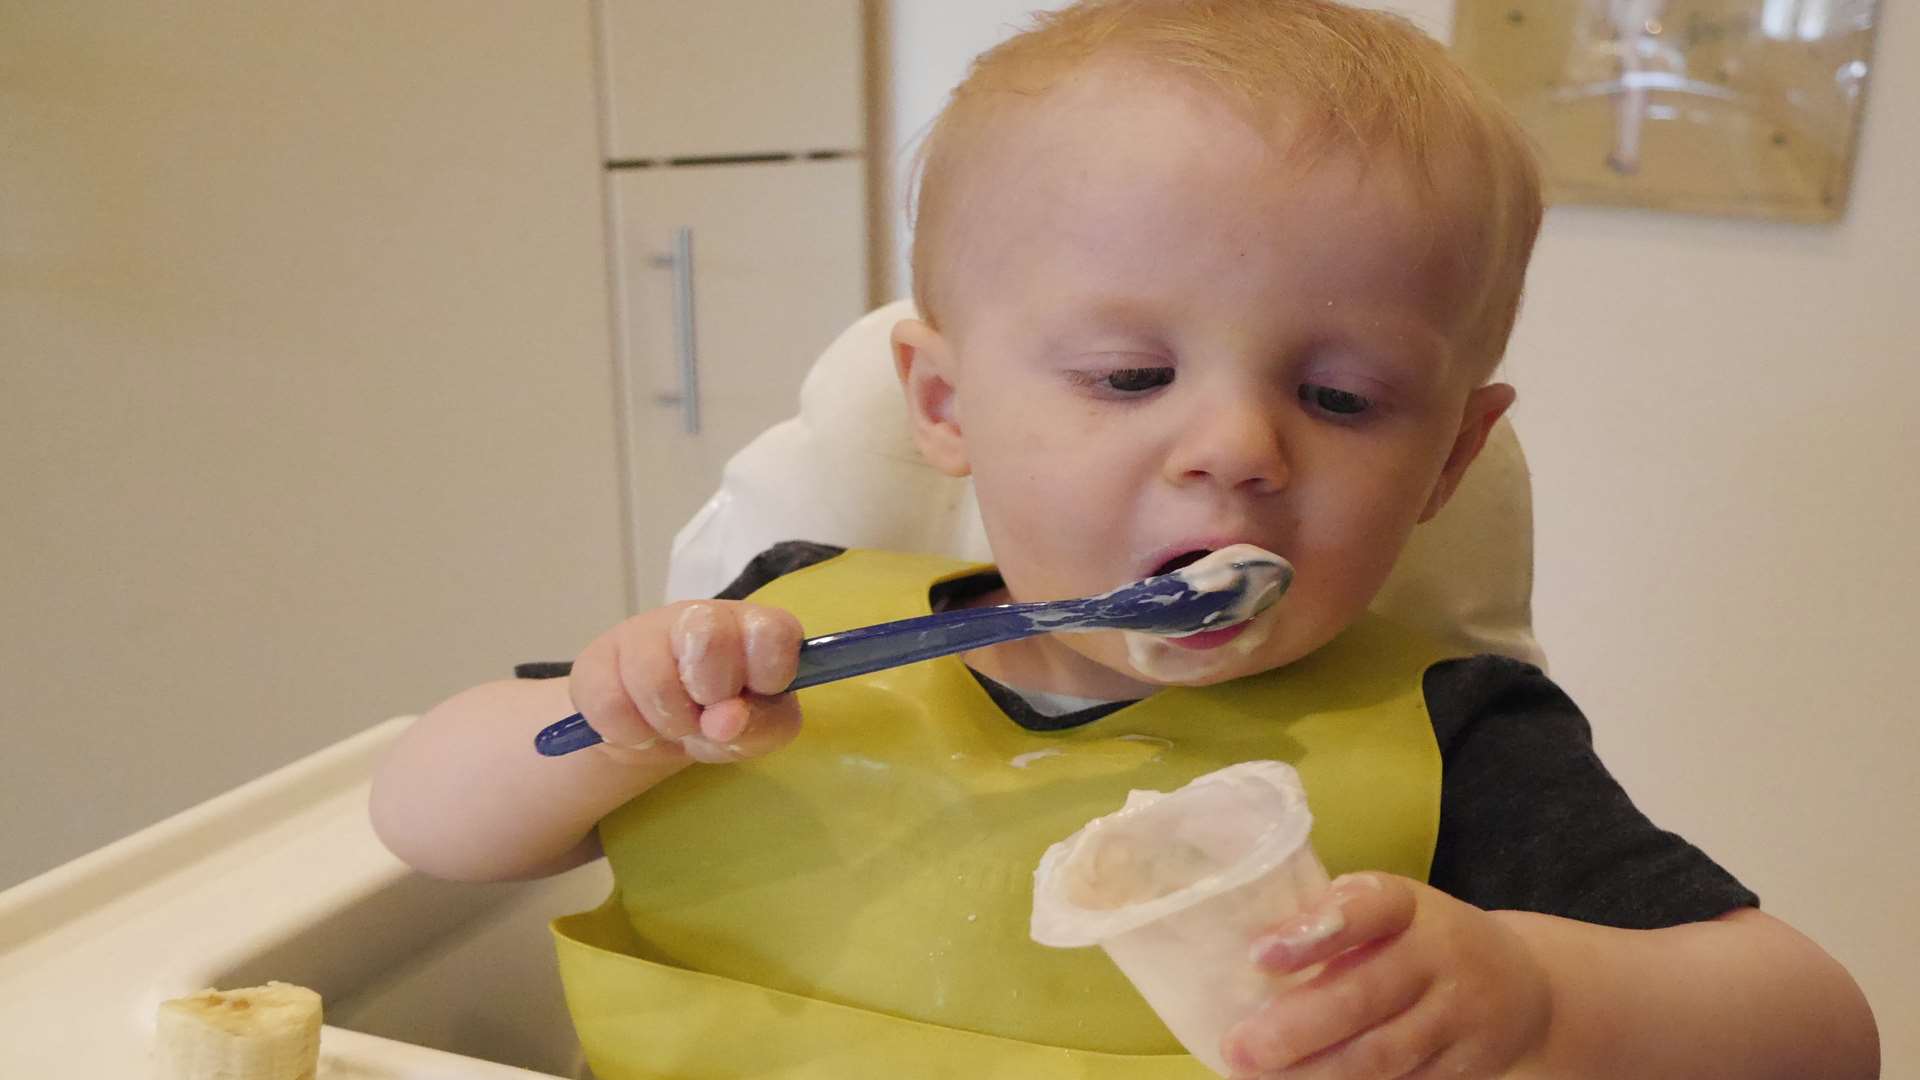 Noah now insists on feeding himself with his yoghurt – so far so good